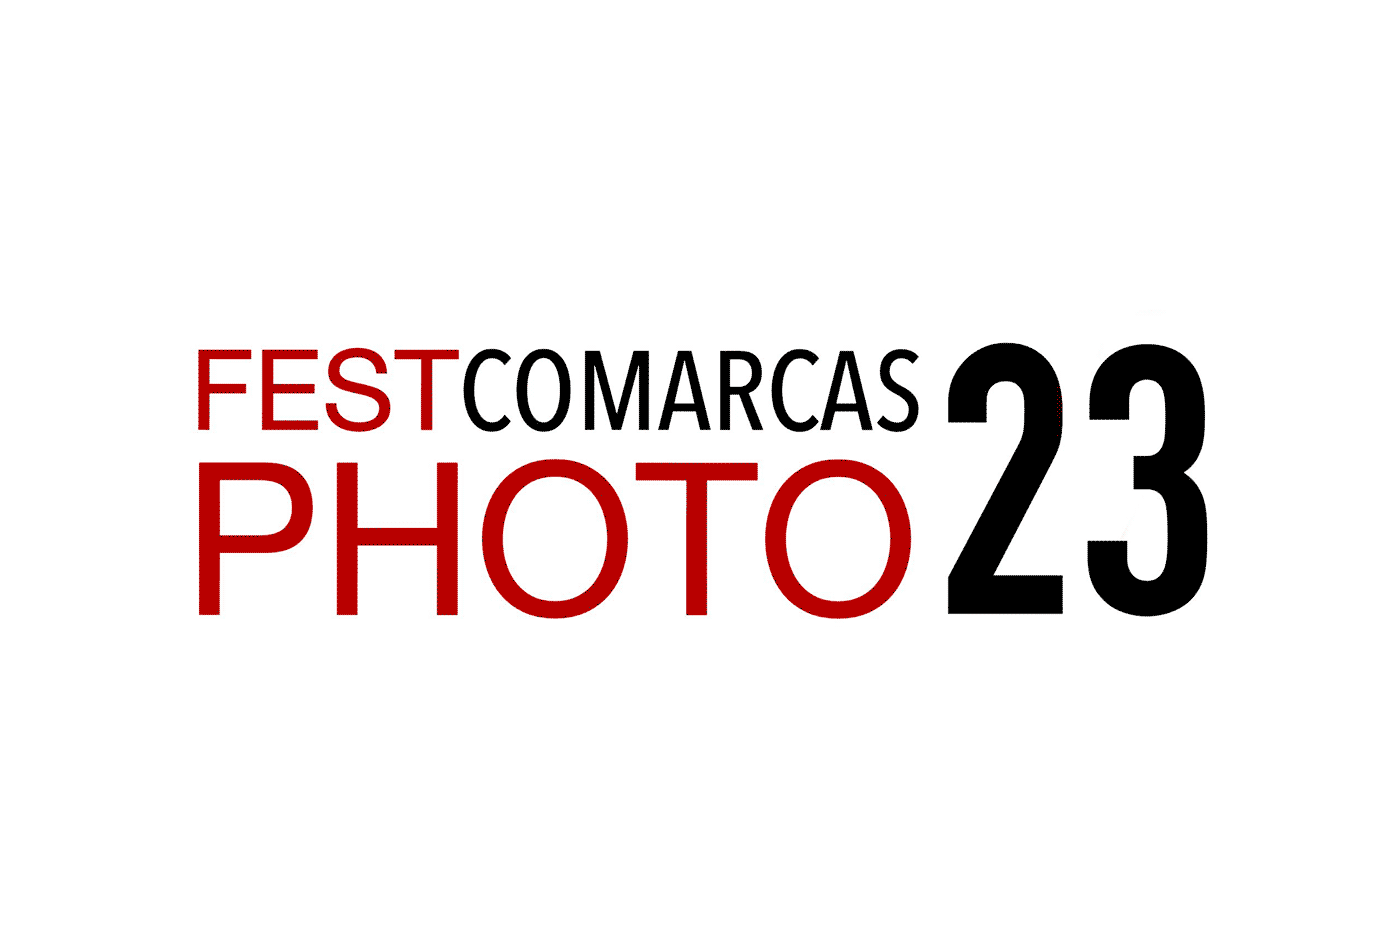 Fest Comarcas Photo 2023 La Redondela festival de fotografia contemporanea exposiciones